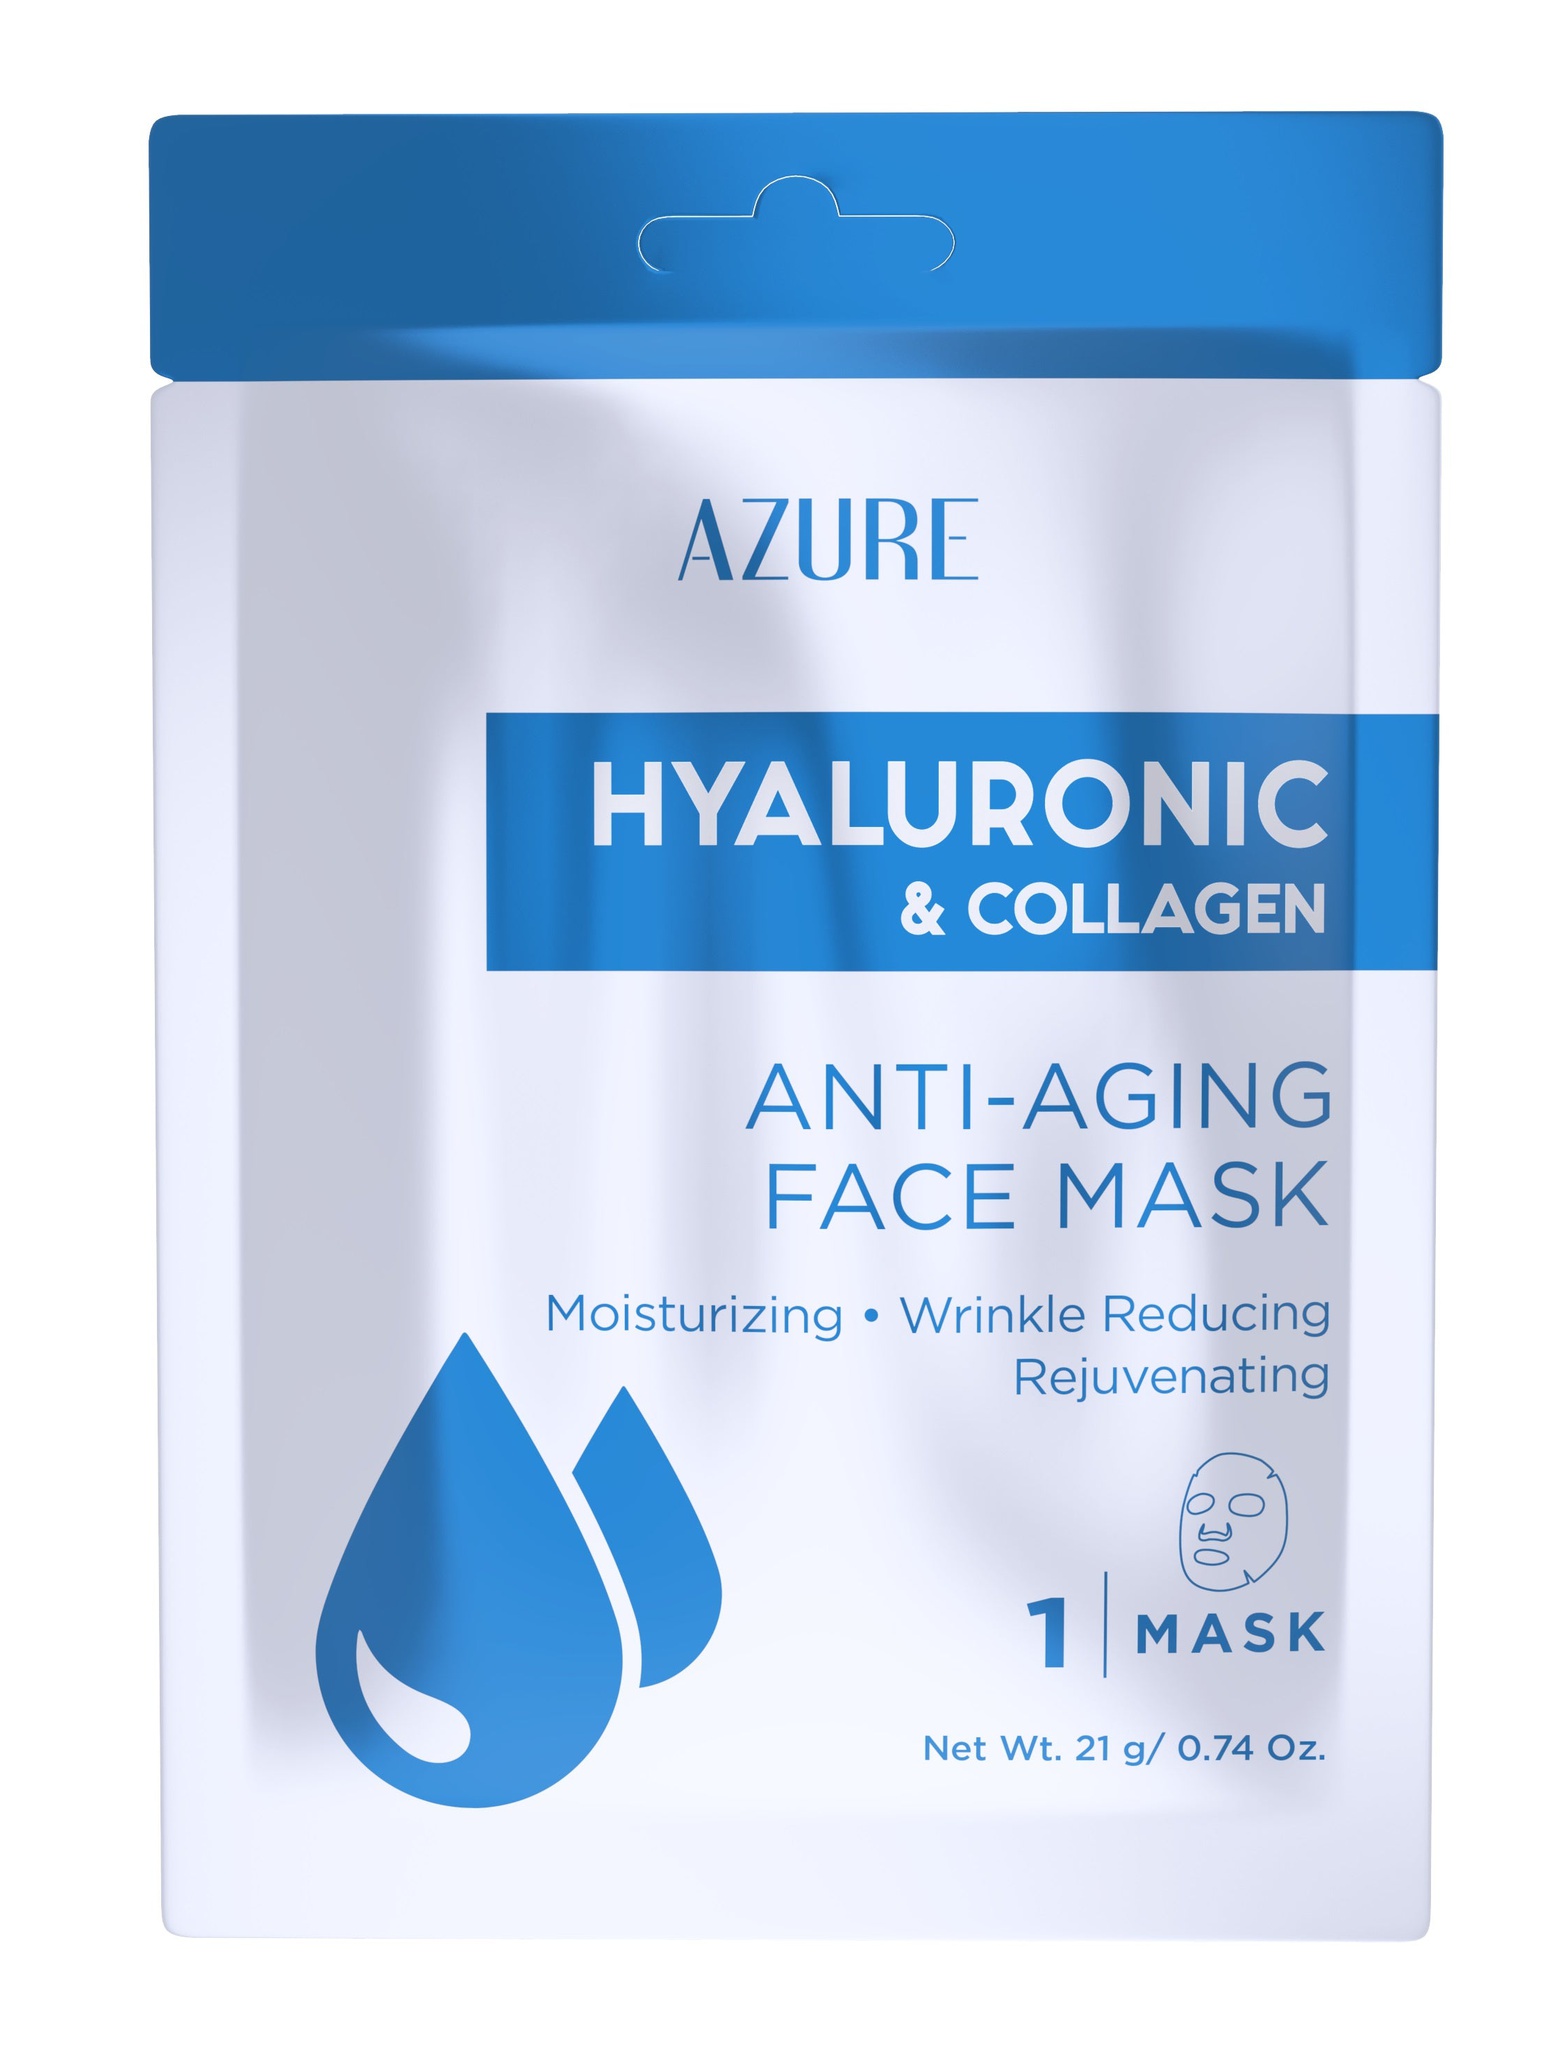 Azure Hyaluronic & Collagen Anti-aging Face Sheet Mask